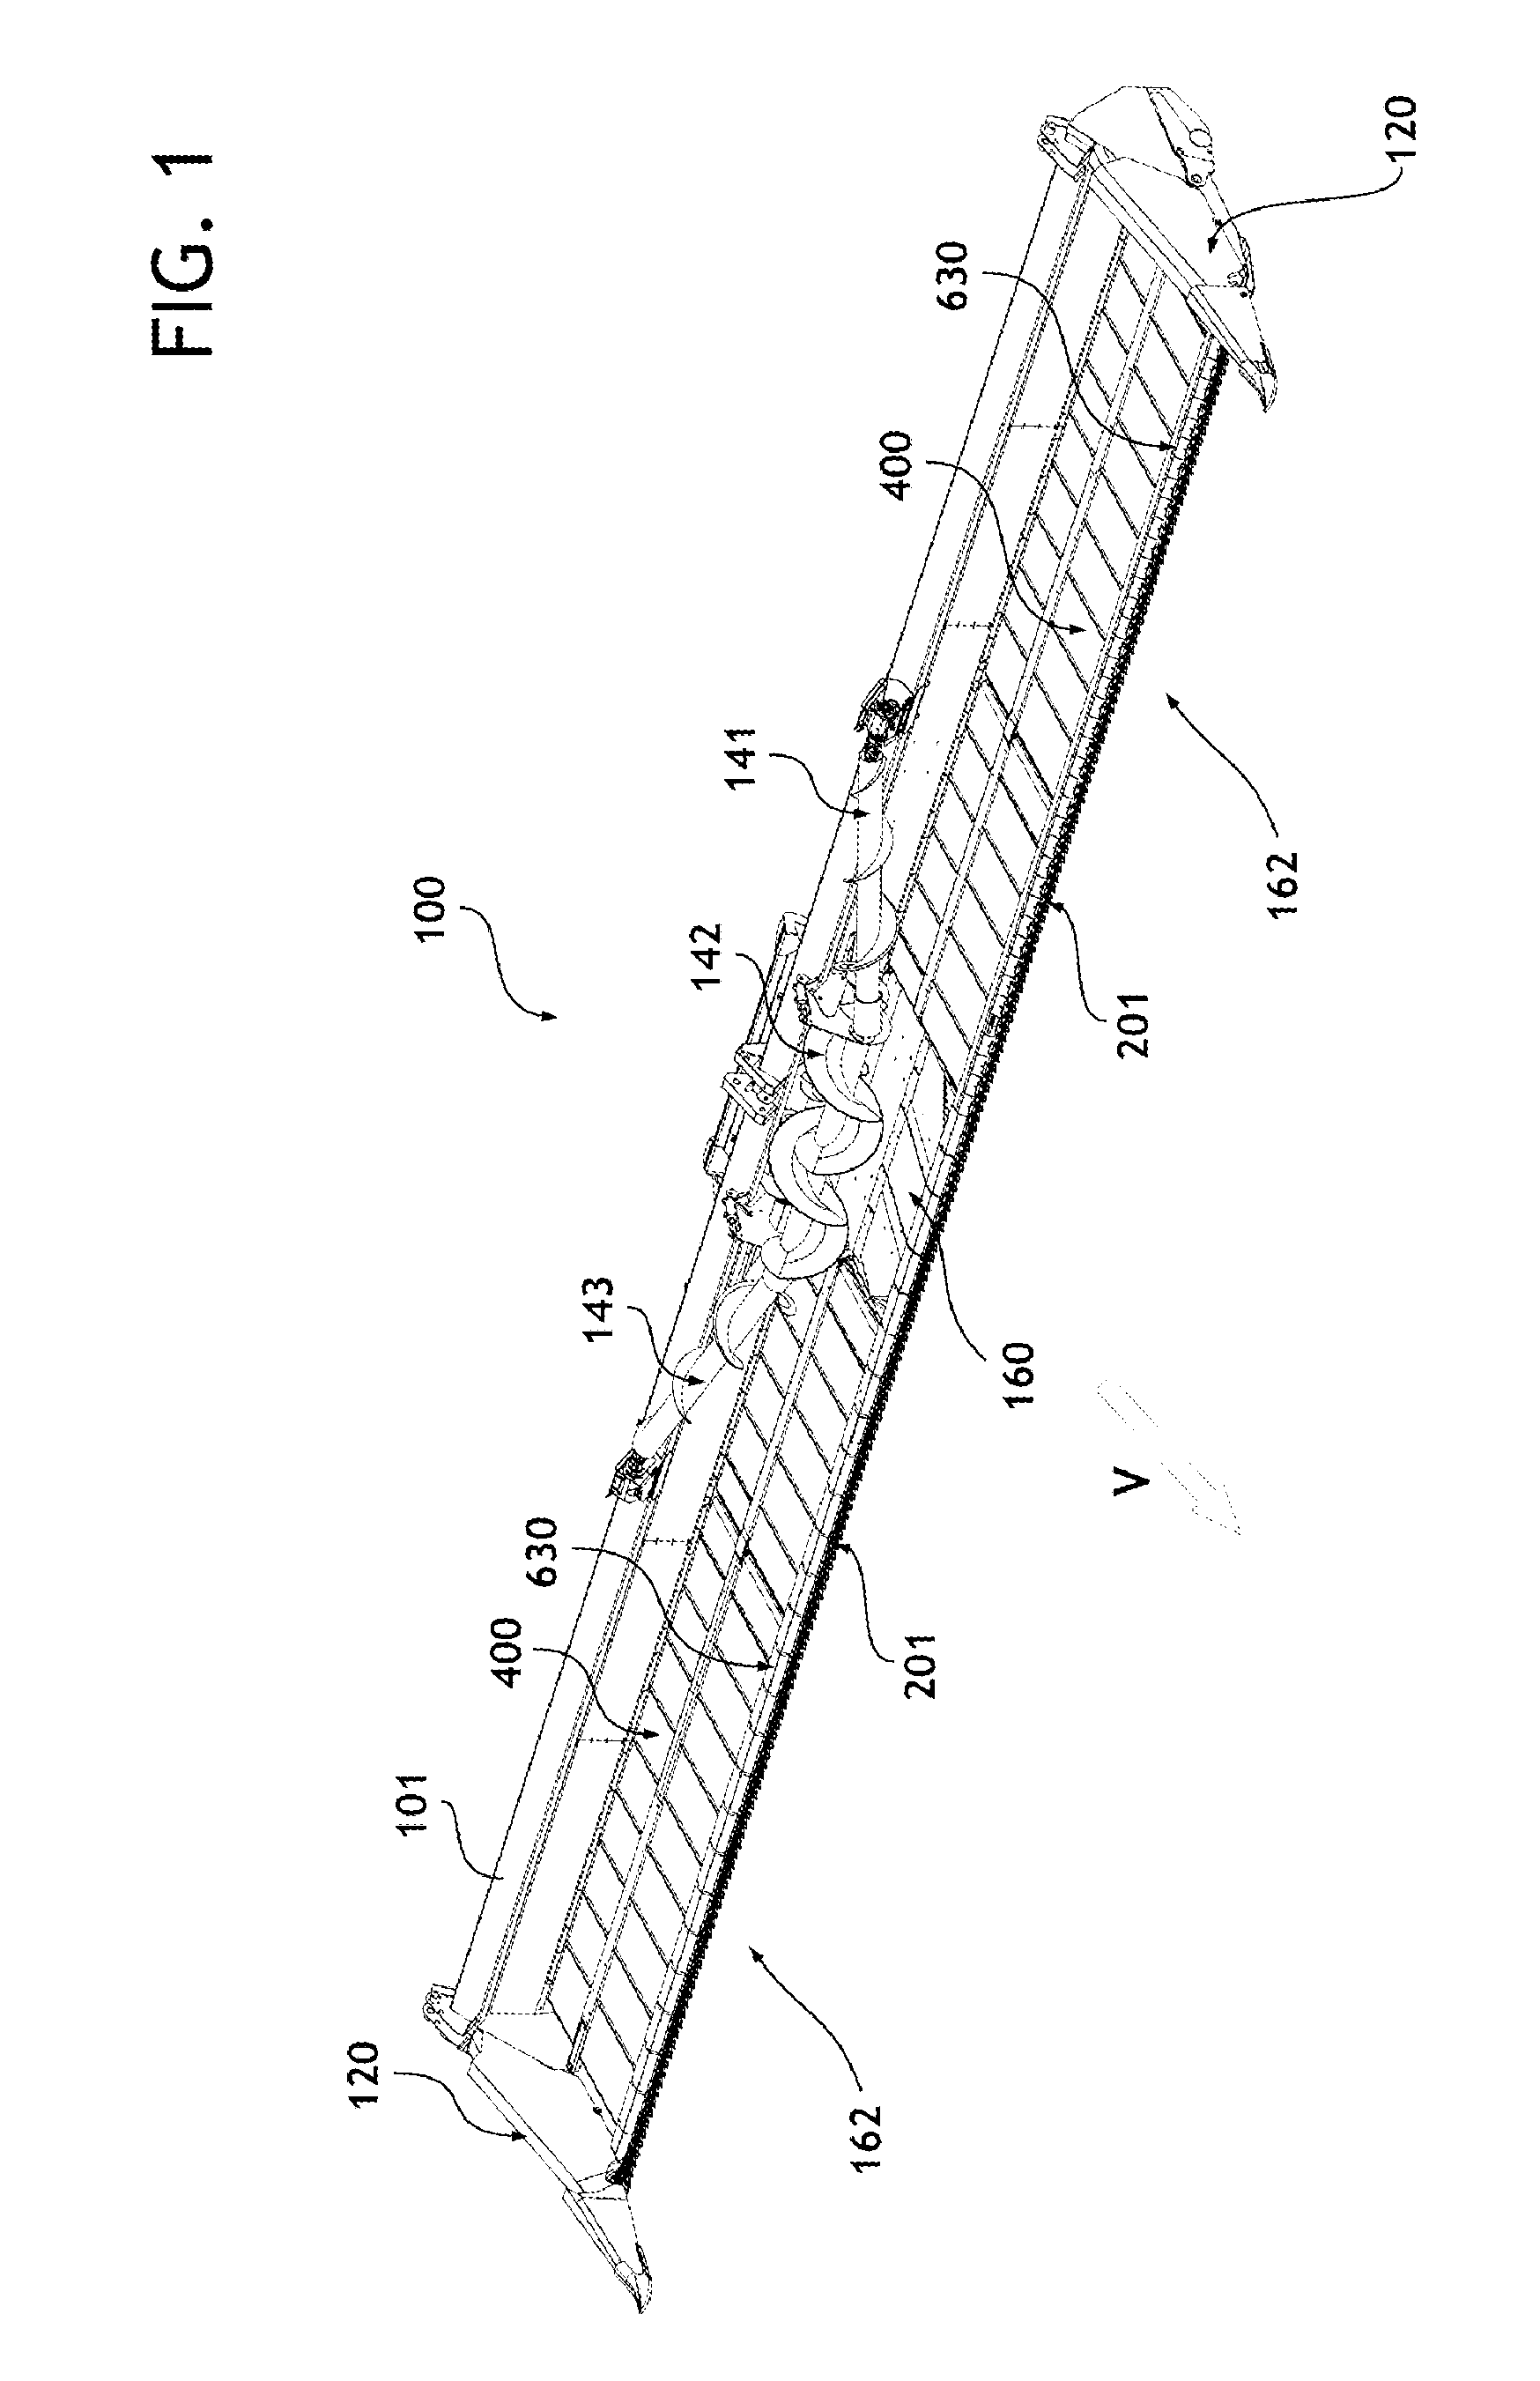 Belt sealing crop deflector for a flexible draper platform